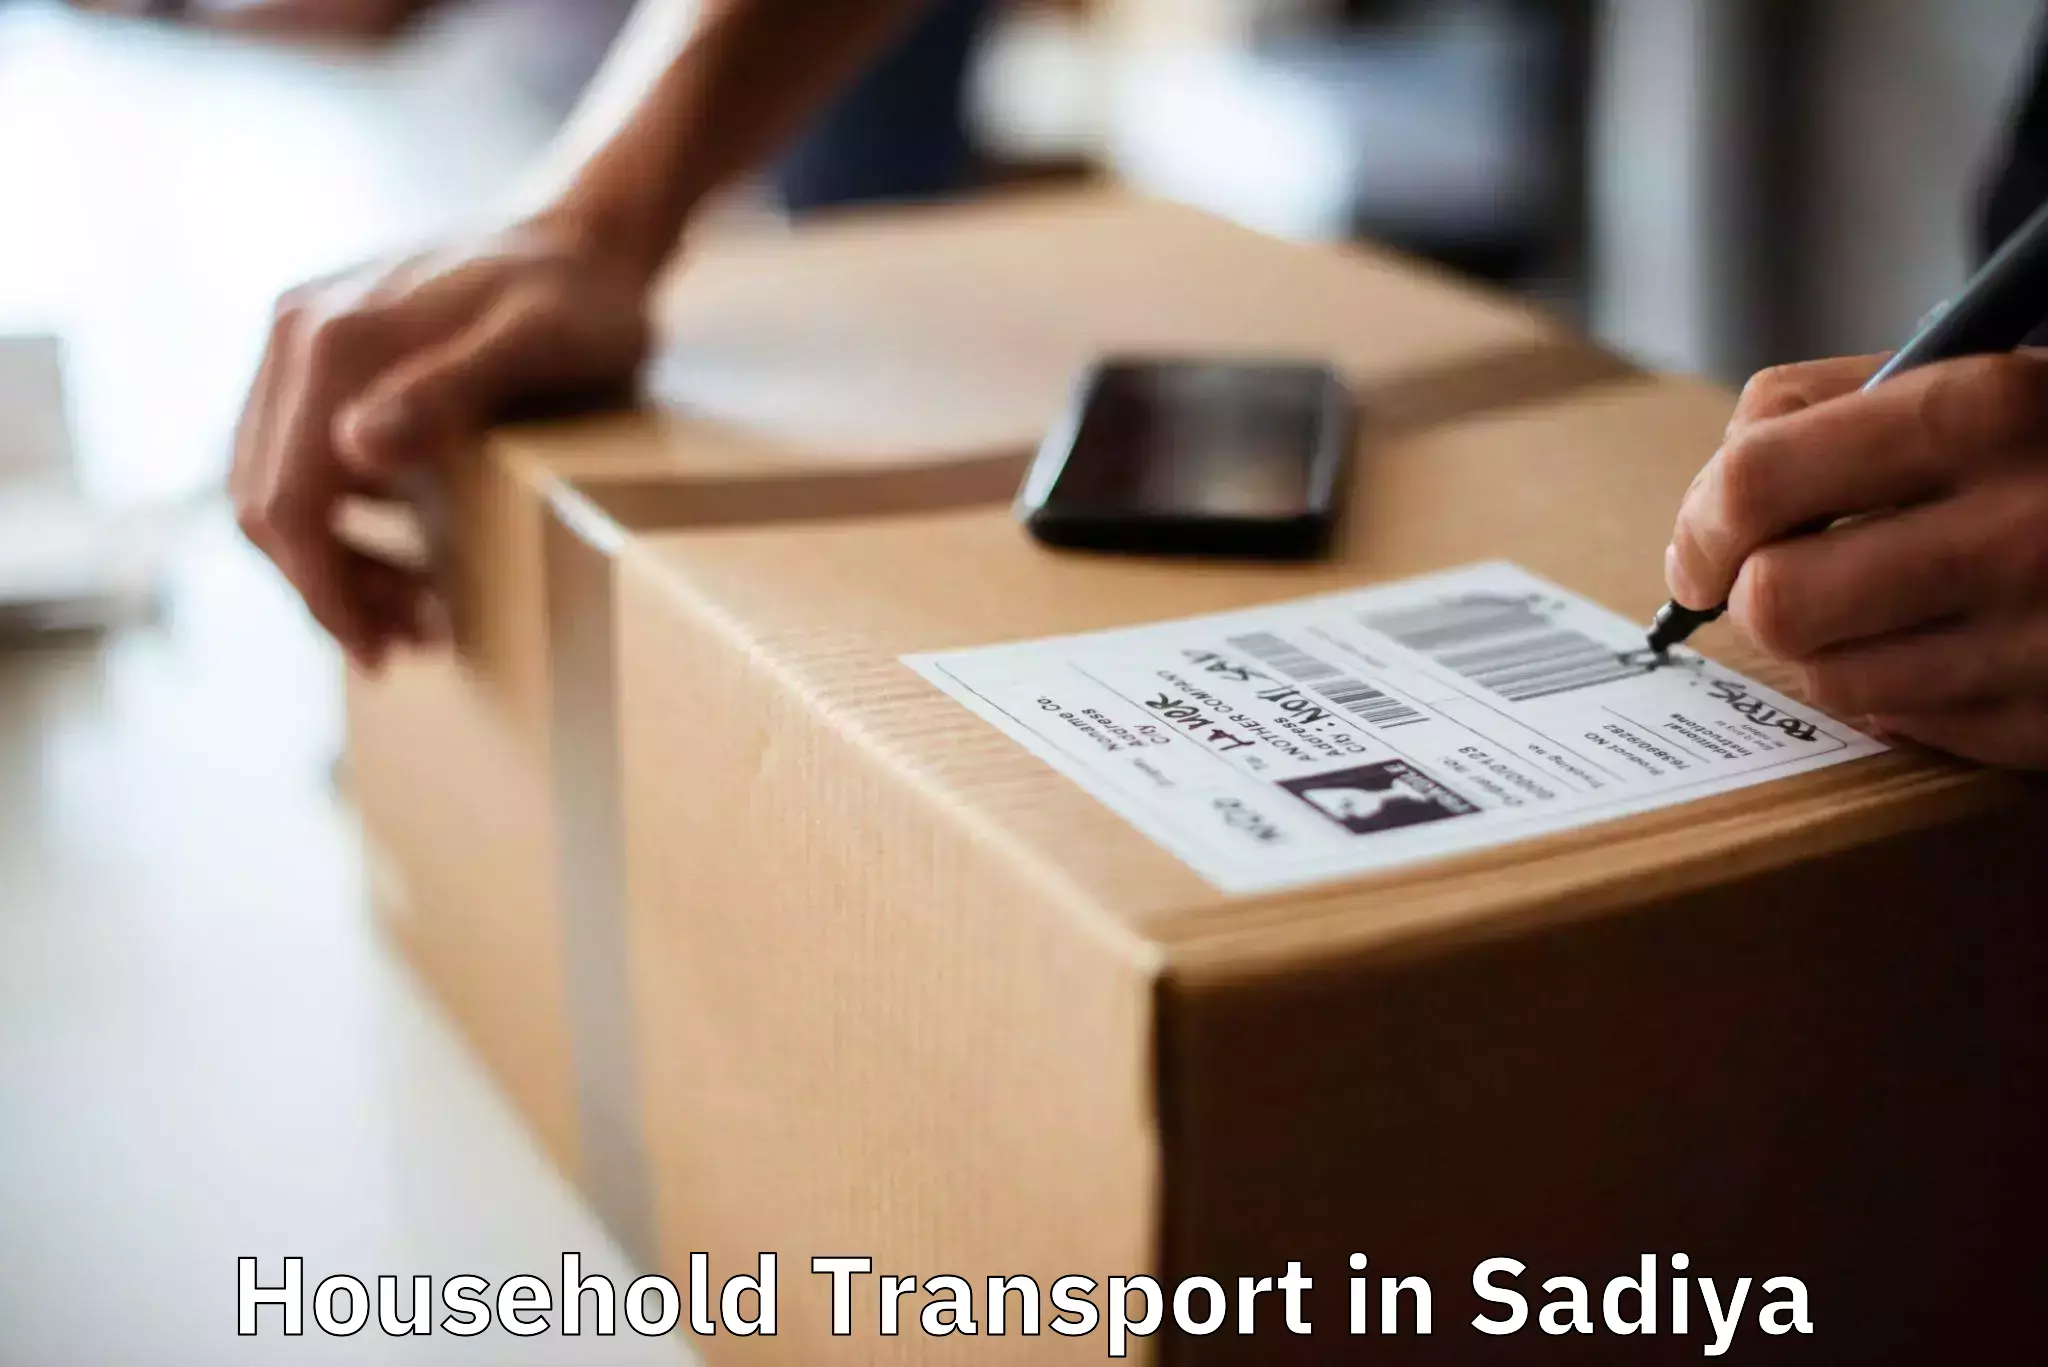 Furniture relocation experts in Sadiya